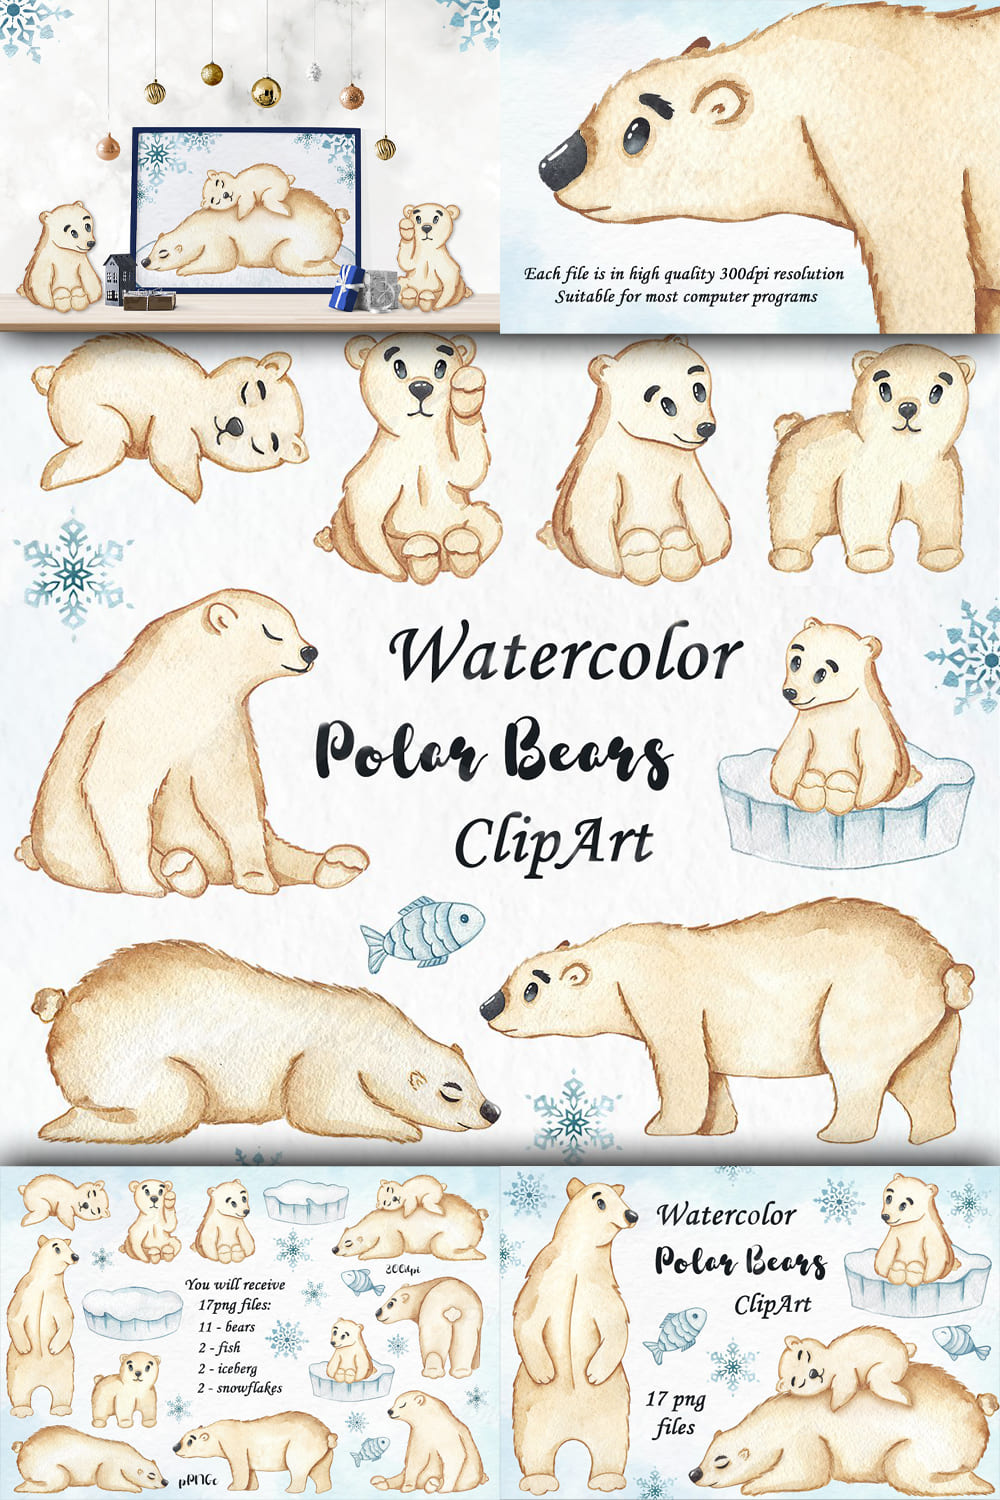 watercolor polar bears clipart pinterest 1000 1500